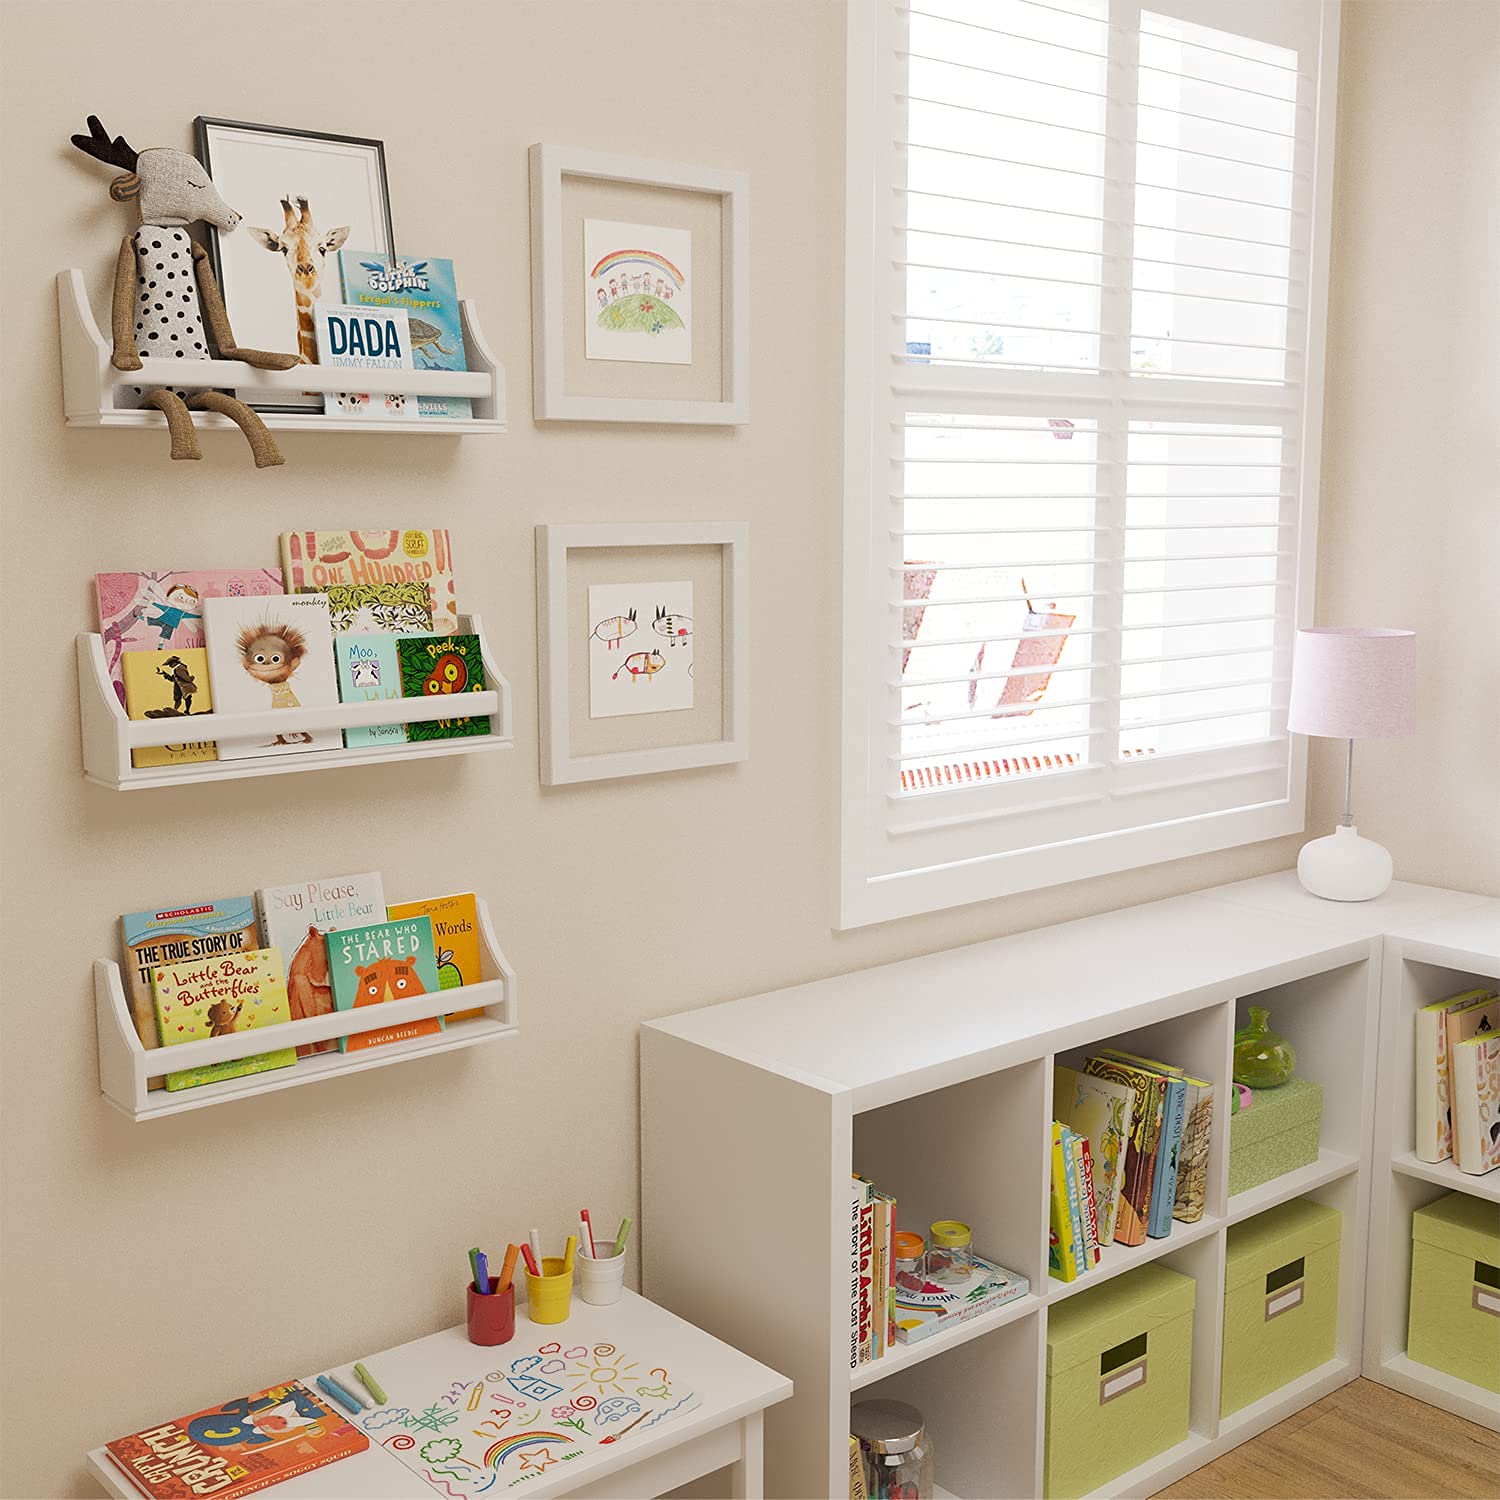 Nursery Décor Wall Shelves – 3 Set Shelf - Crown Molding Floating Bookshelves for Baby and Kids Room Book Organizer Storage Ledge, Display Holder for Toys, CDs, Baby Monitor, Frames